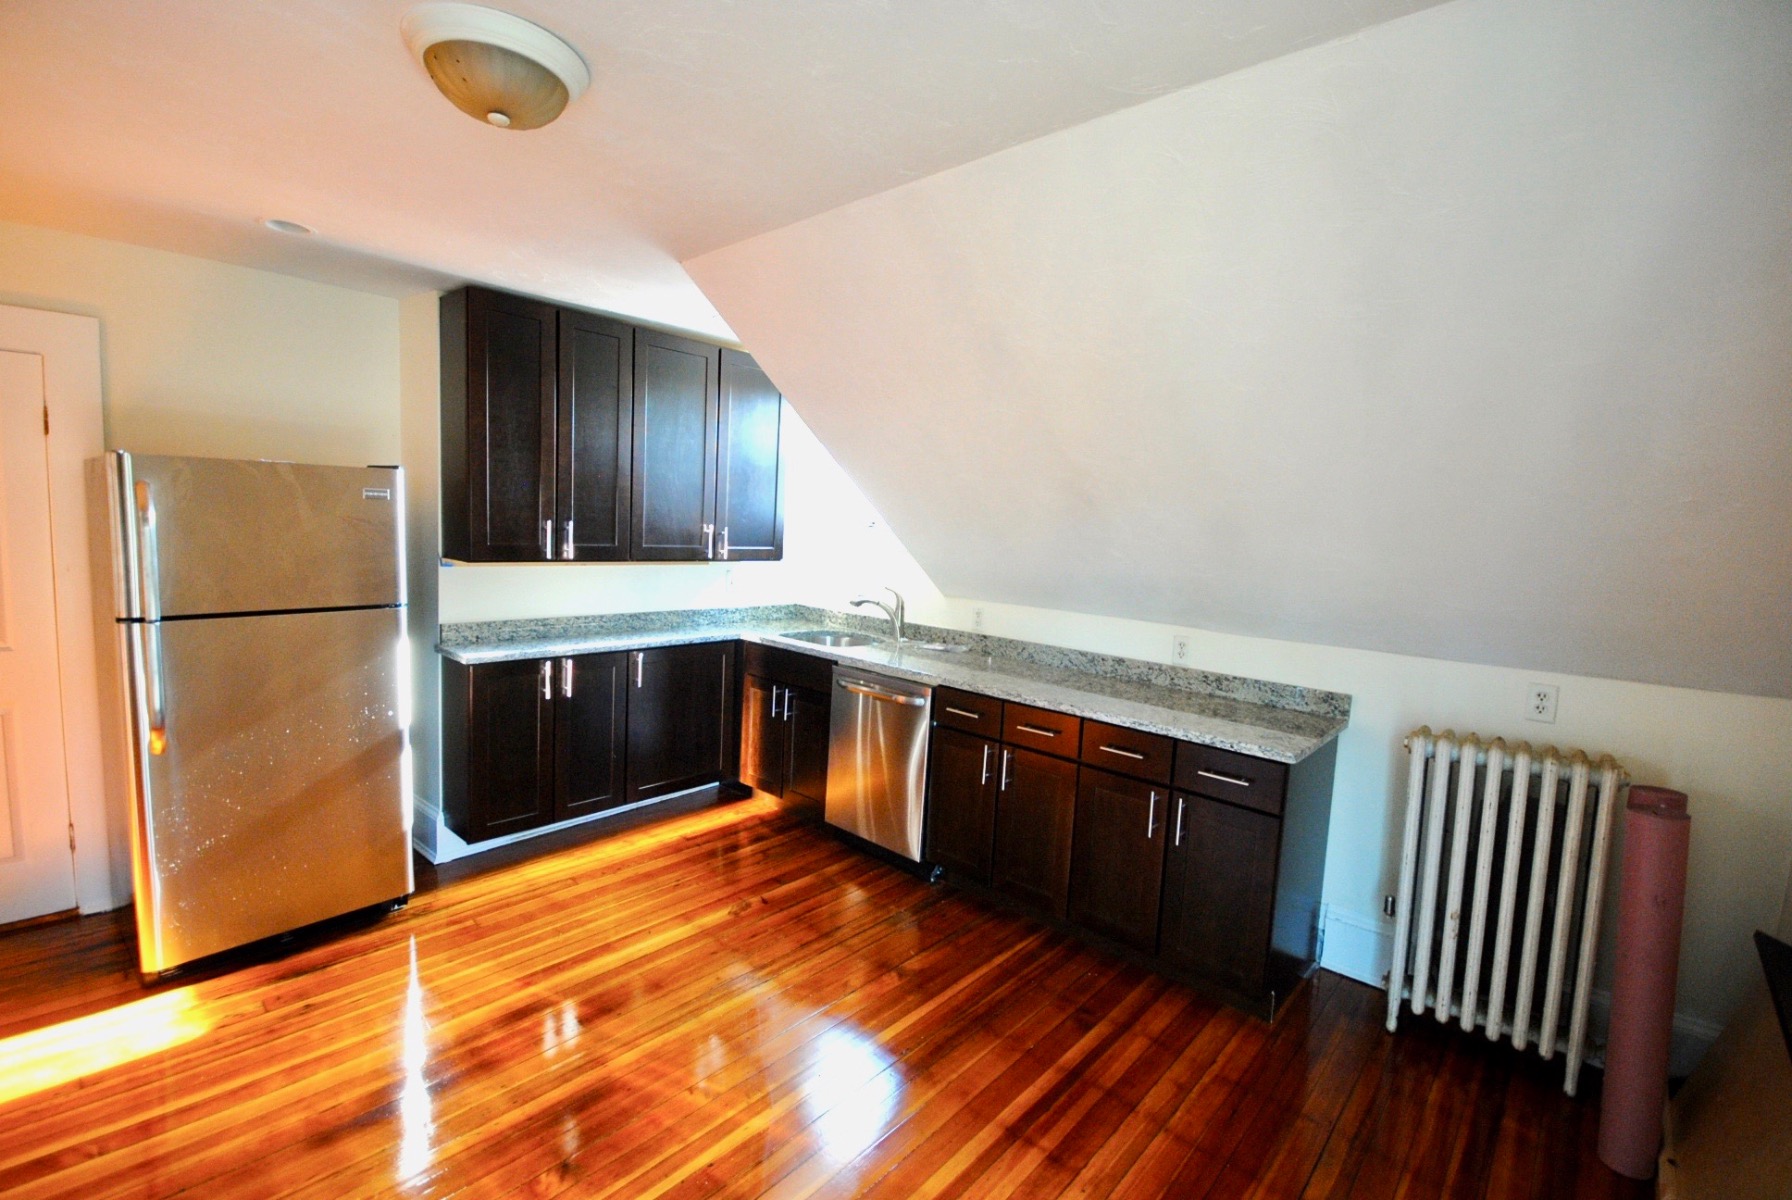 Photos of apartment on Topliff St.,Boston MA 02122